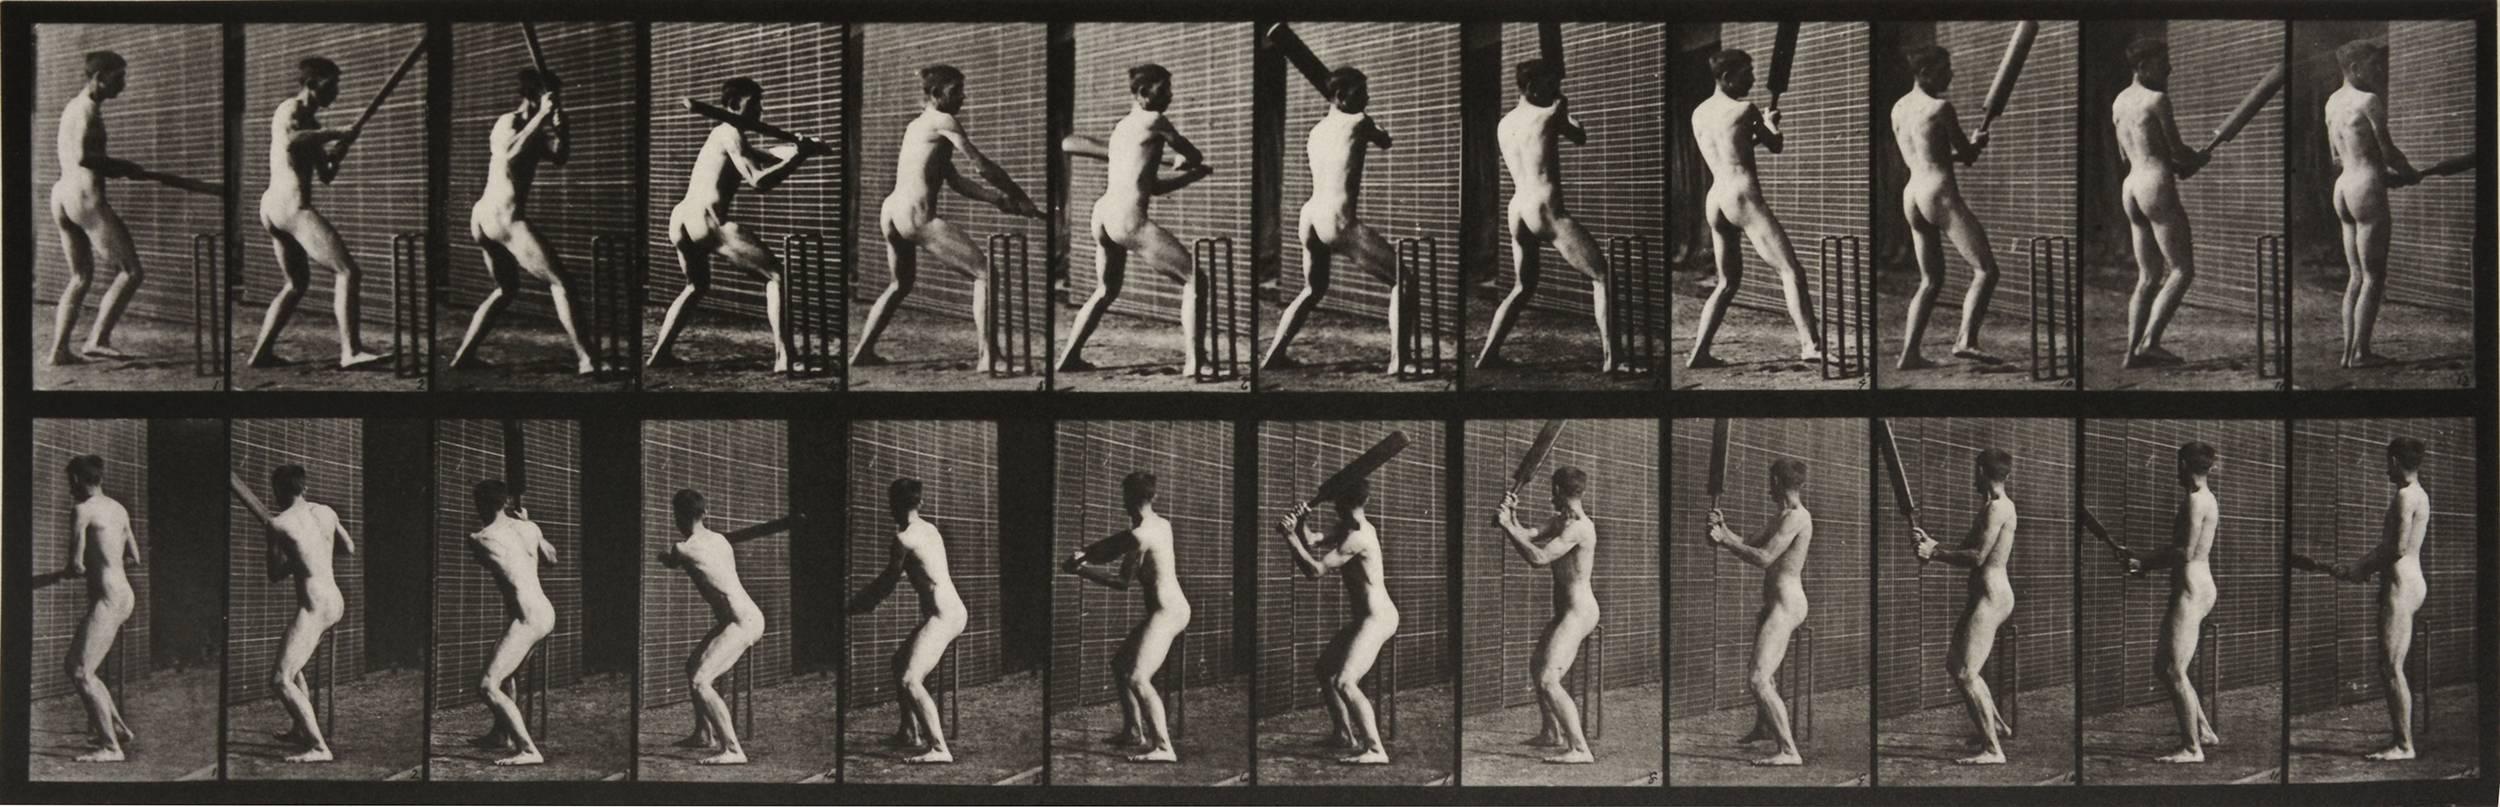 Eadweard Muybridge Black and White Photograph - Animal Locomotion: Plate 293 (Nude Man Playing Cricket), 1887